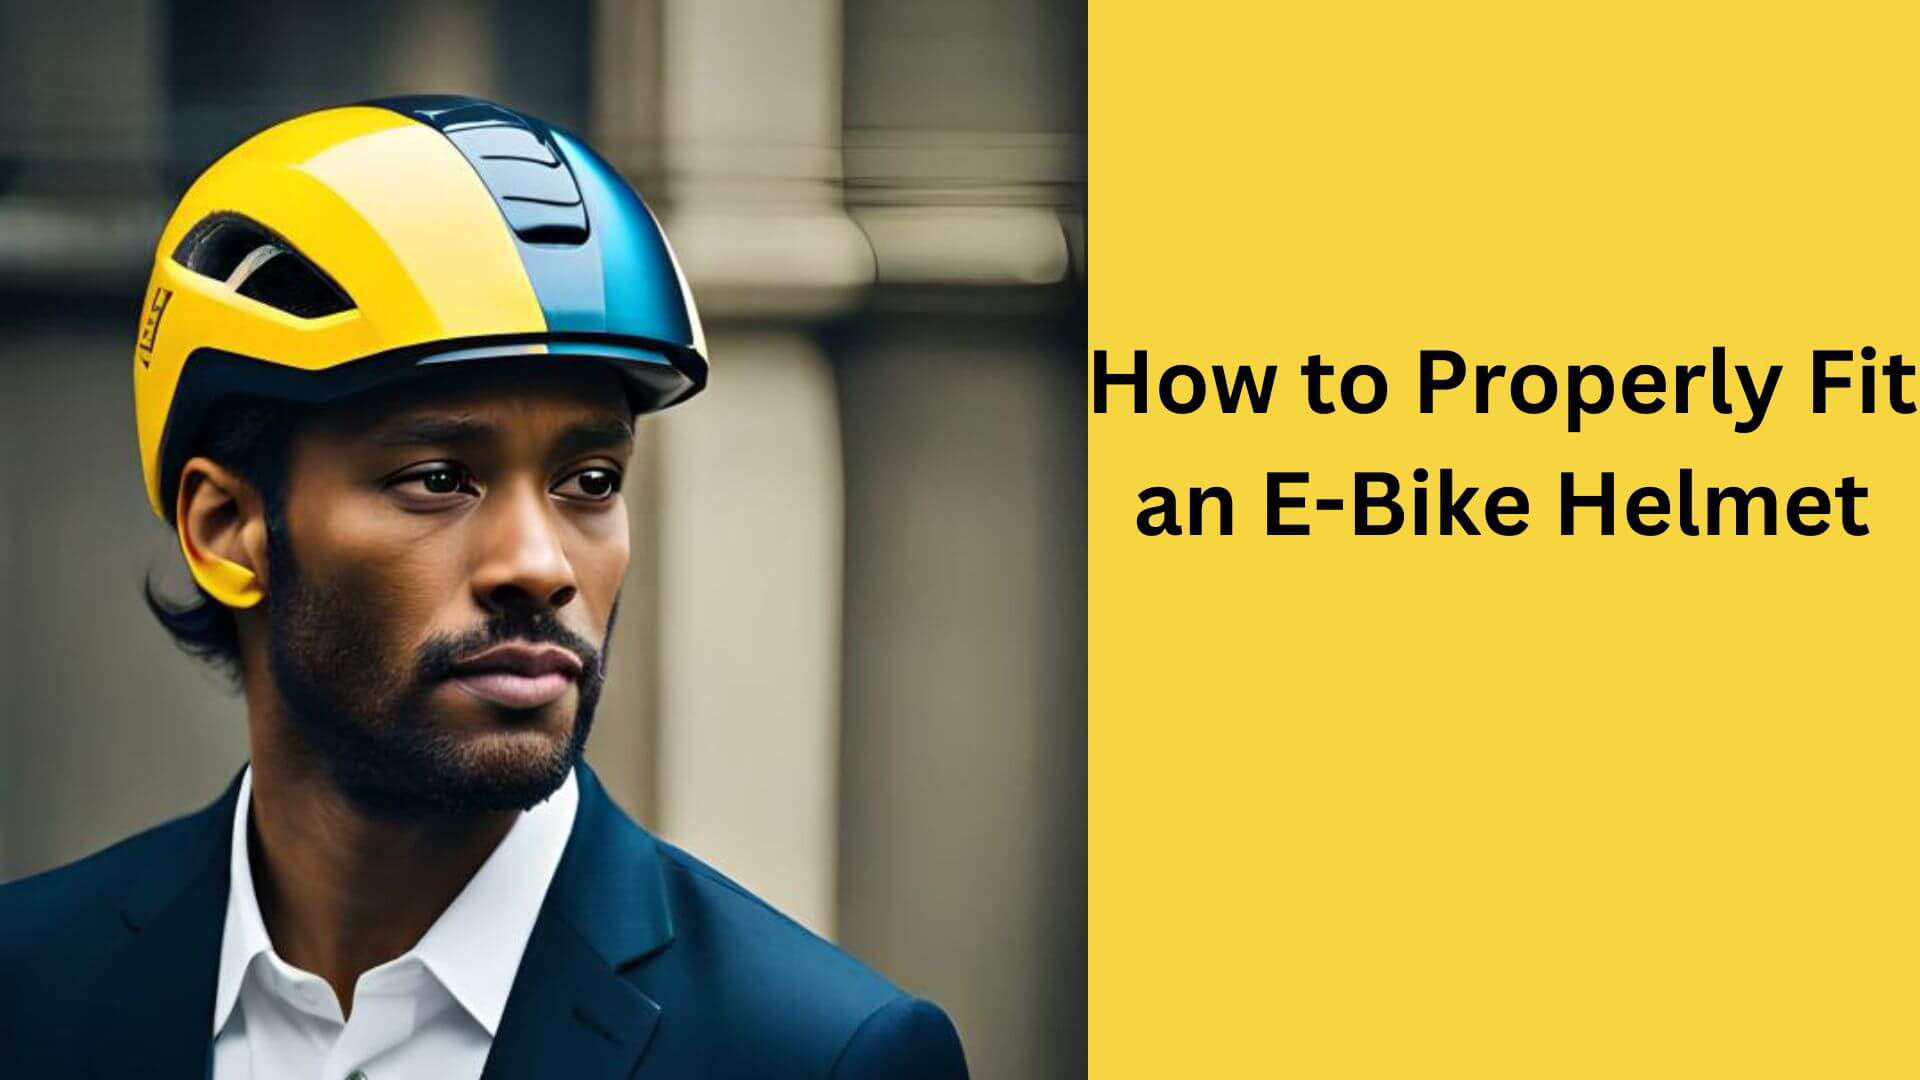 How to Properly Fit an E-Bike Helmet?